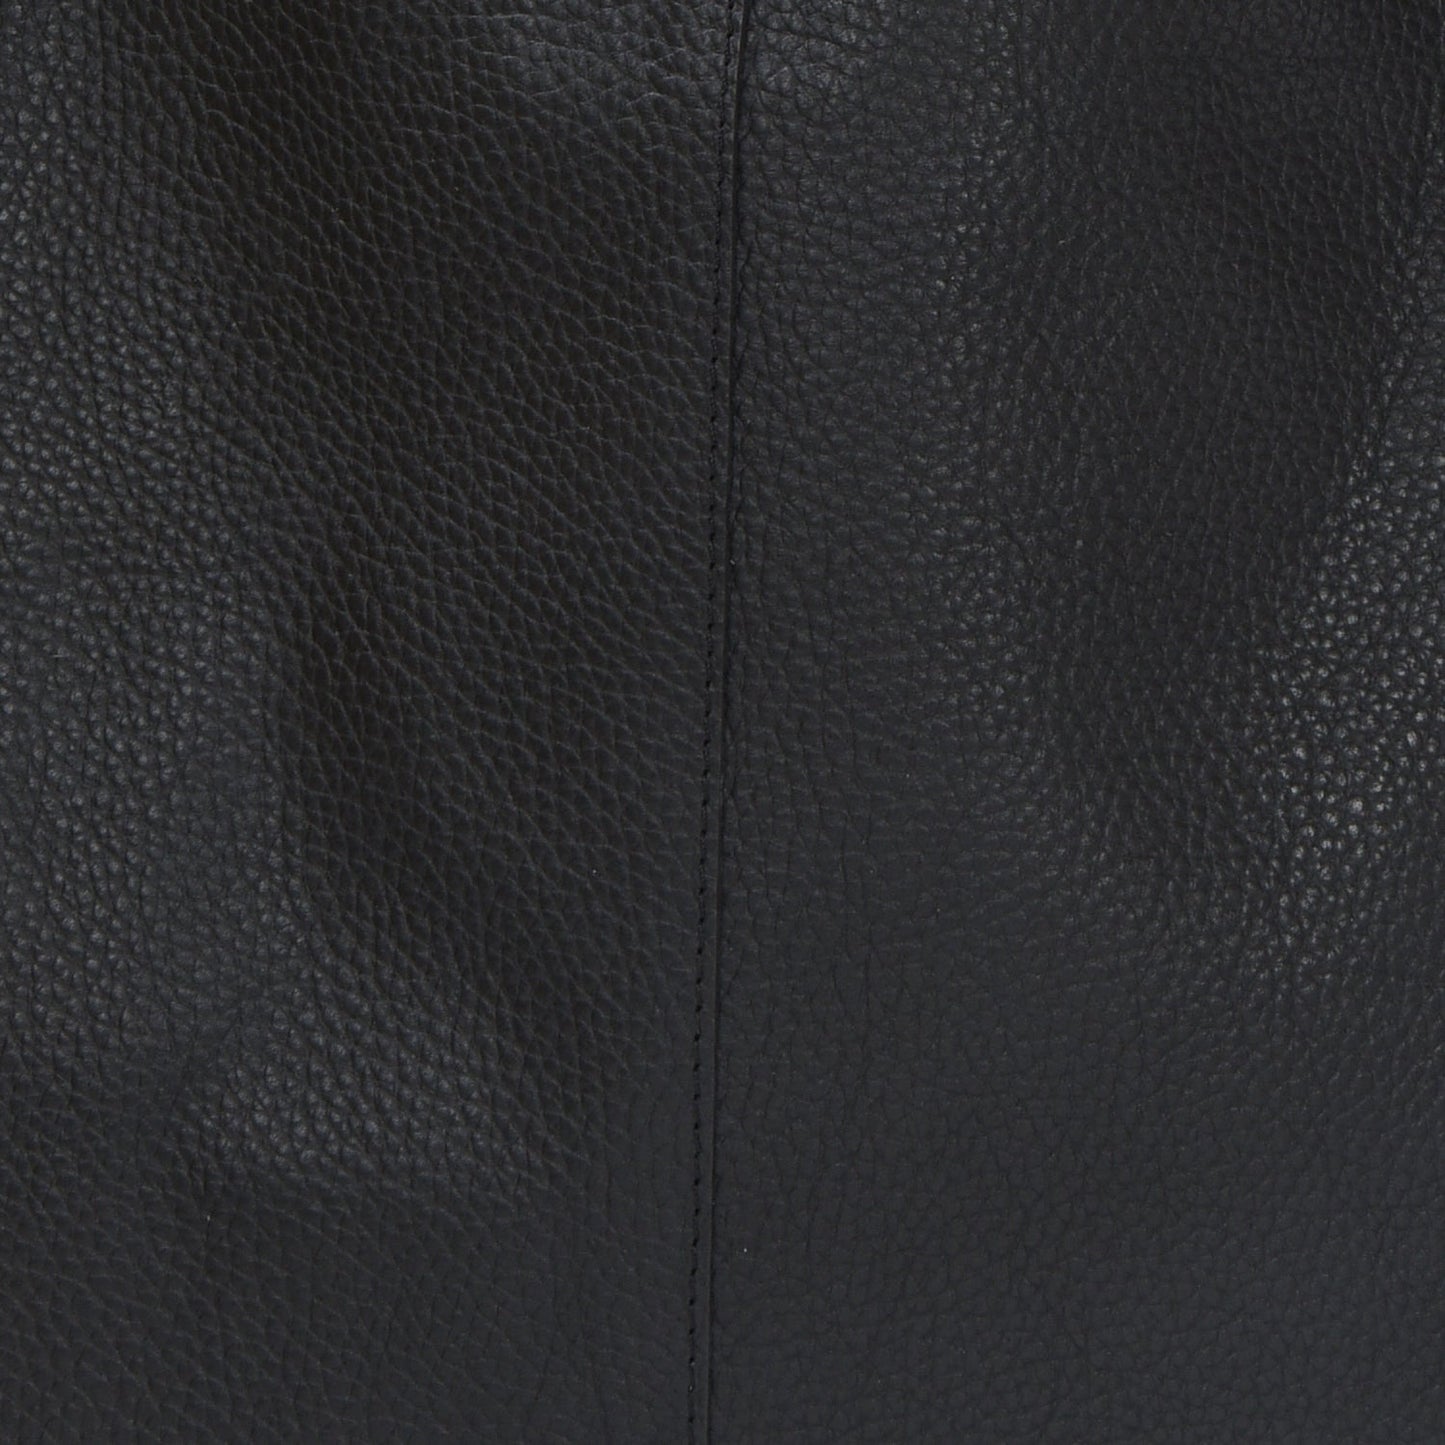 Pink Leopard Print Cowhide Boho Leather Bag Brix Bailey Ethical Bag Brand